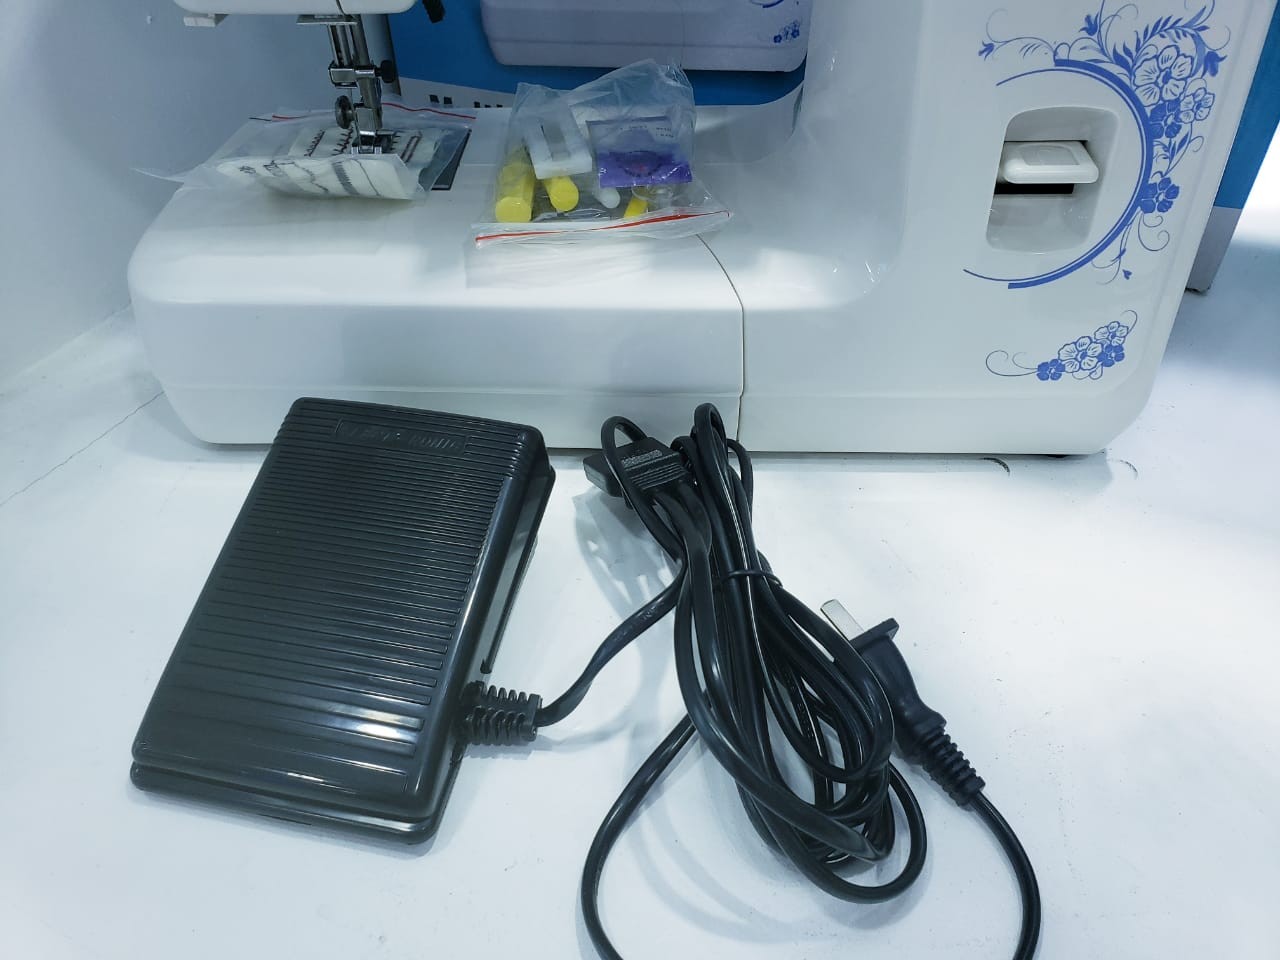 equipos profesionales - Maquina de coser Electrica multifuncional profesional JUKKY FH6224 3